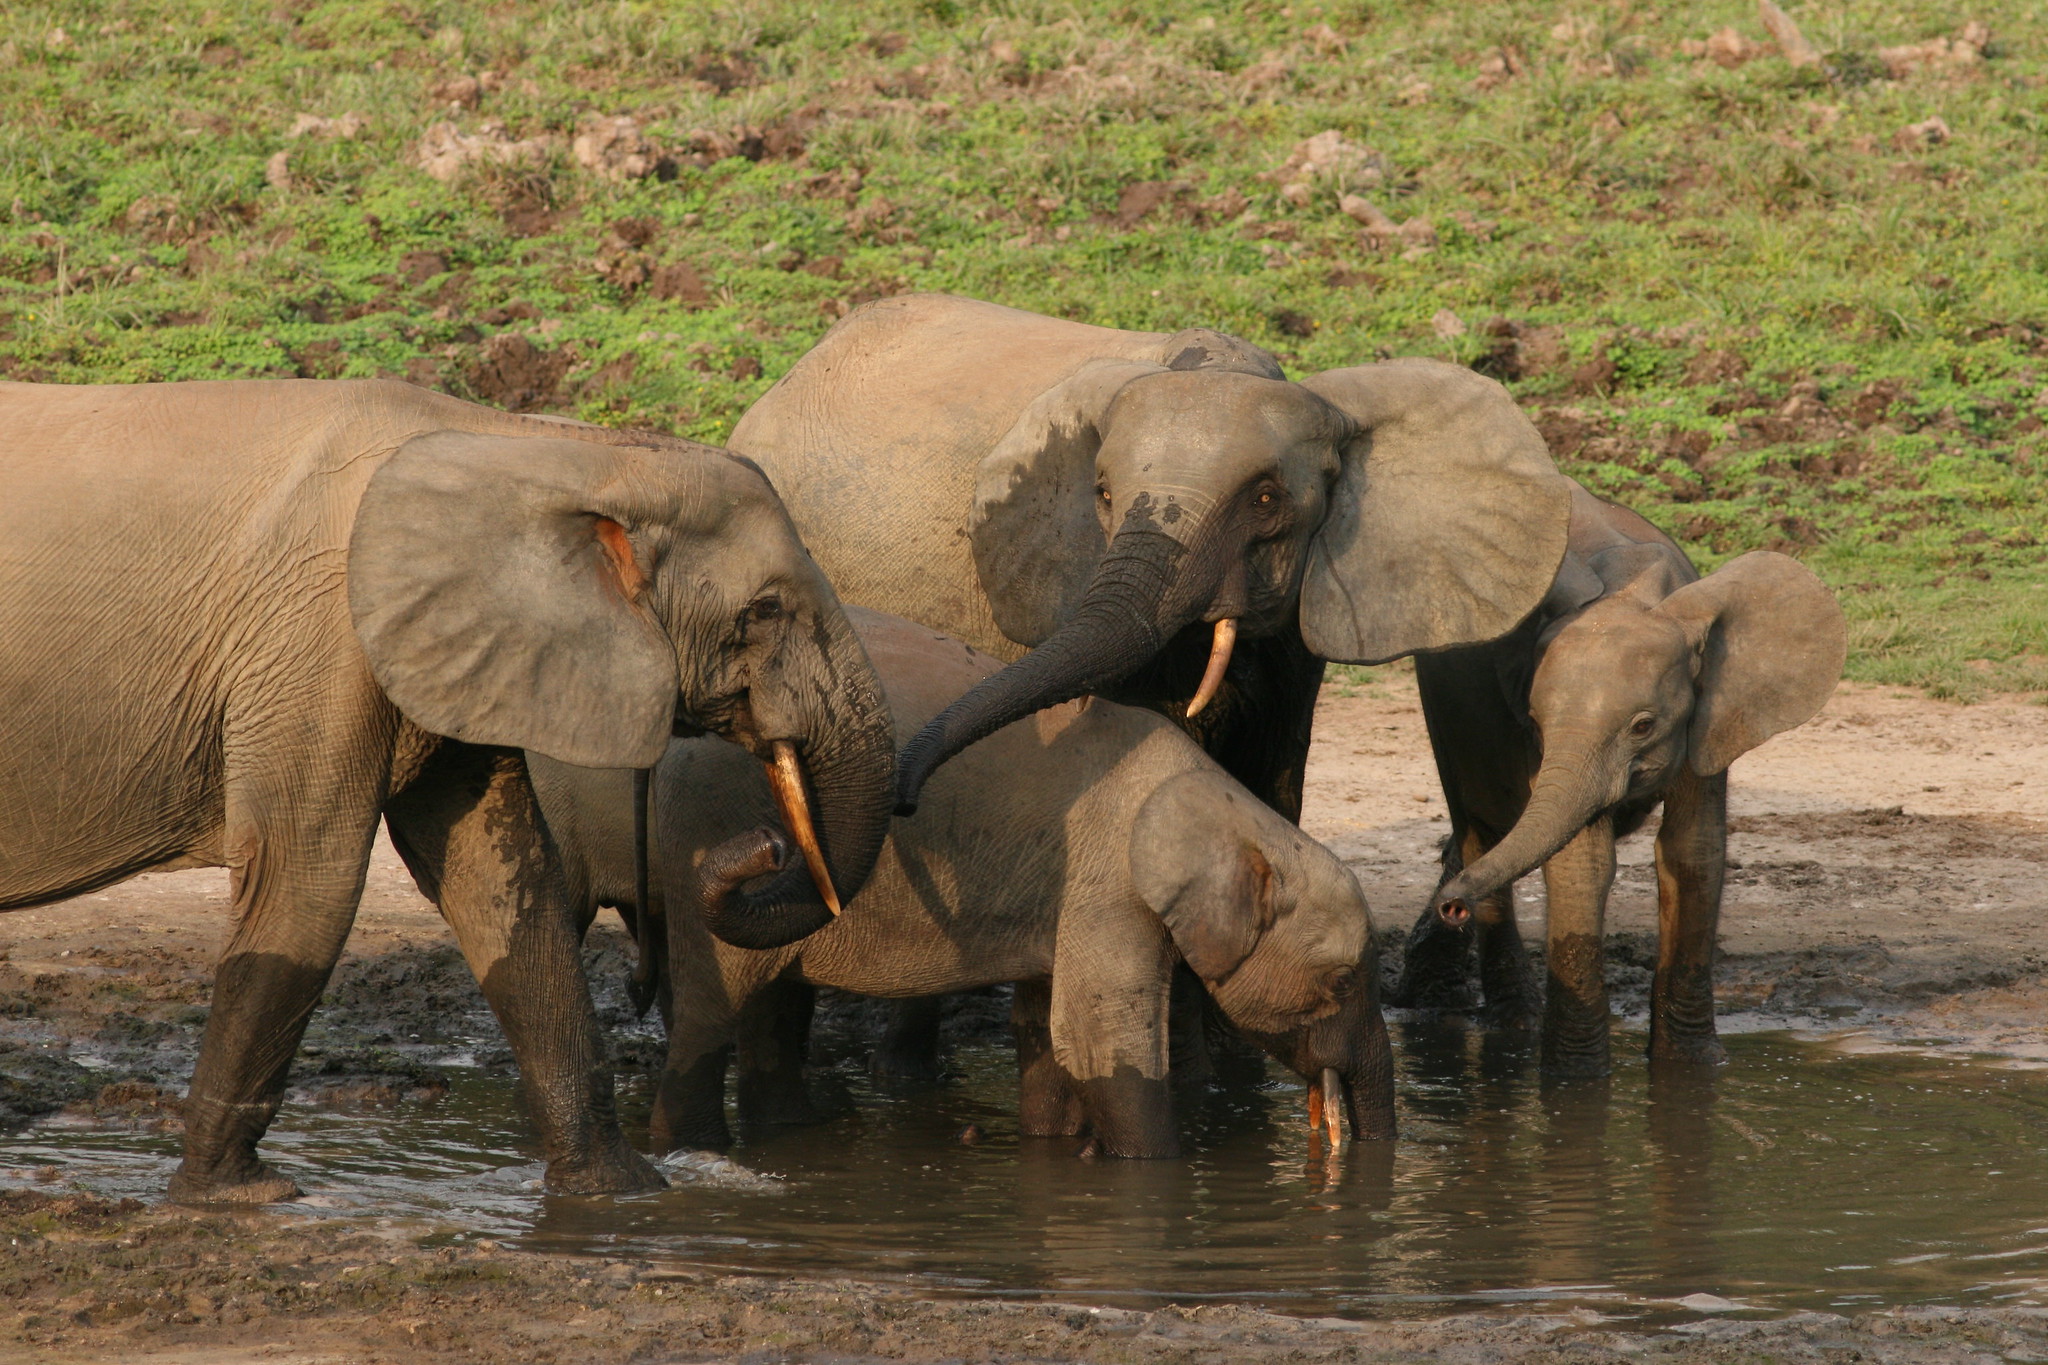 Foresst elephants